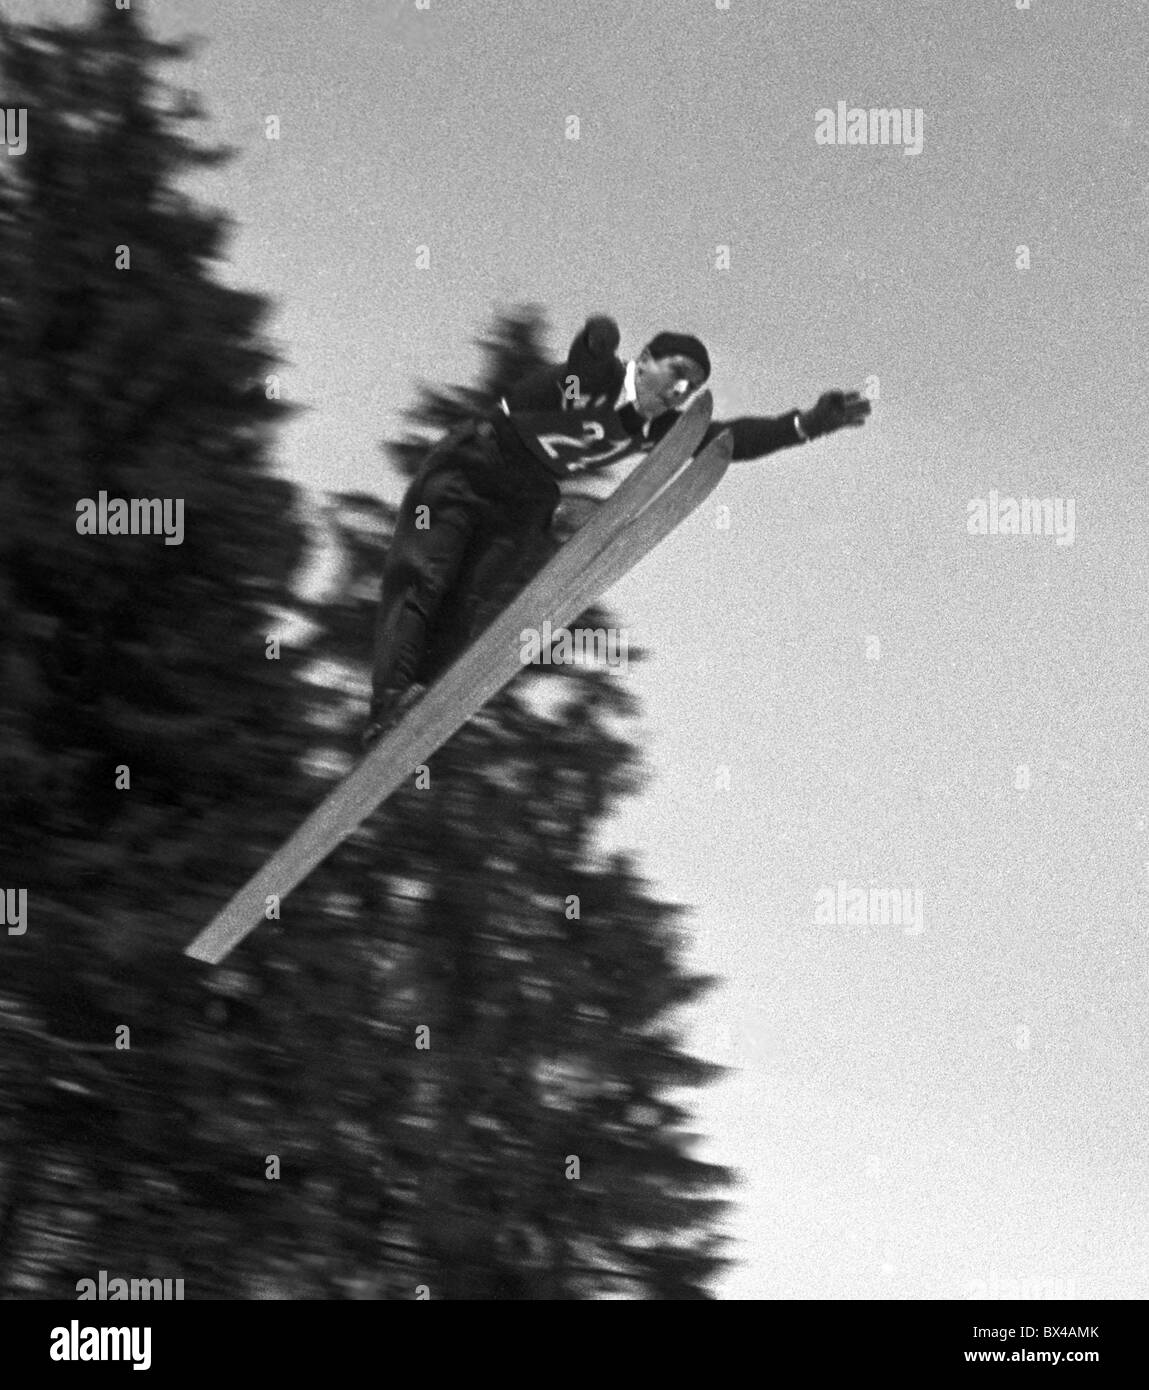 Spindleruv Mlyn, 1949.  Ski jumper is airborne during his attempt. CTK Vintage Photo Stock Photo